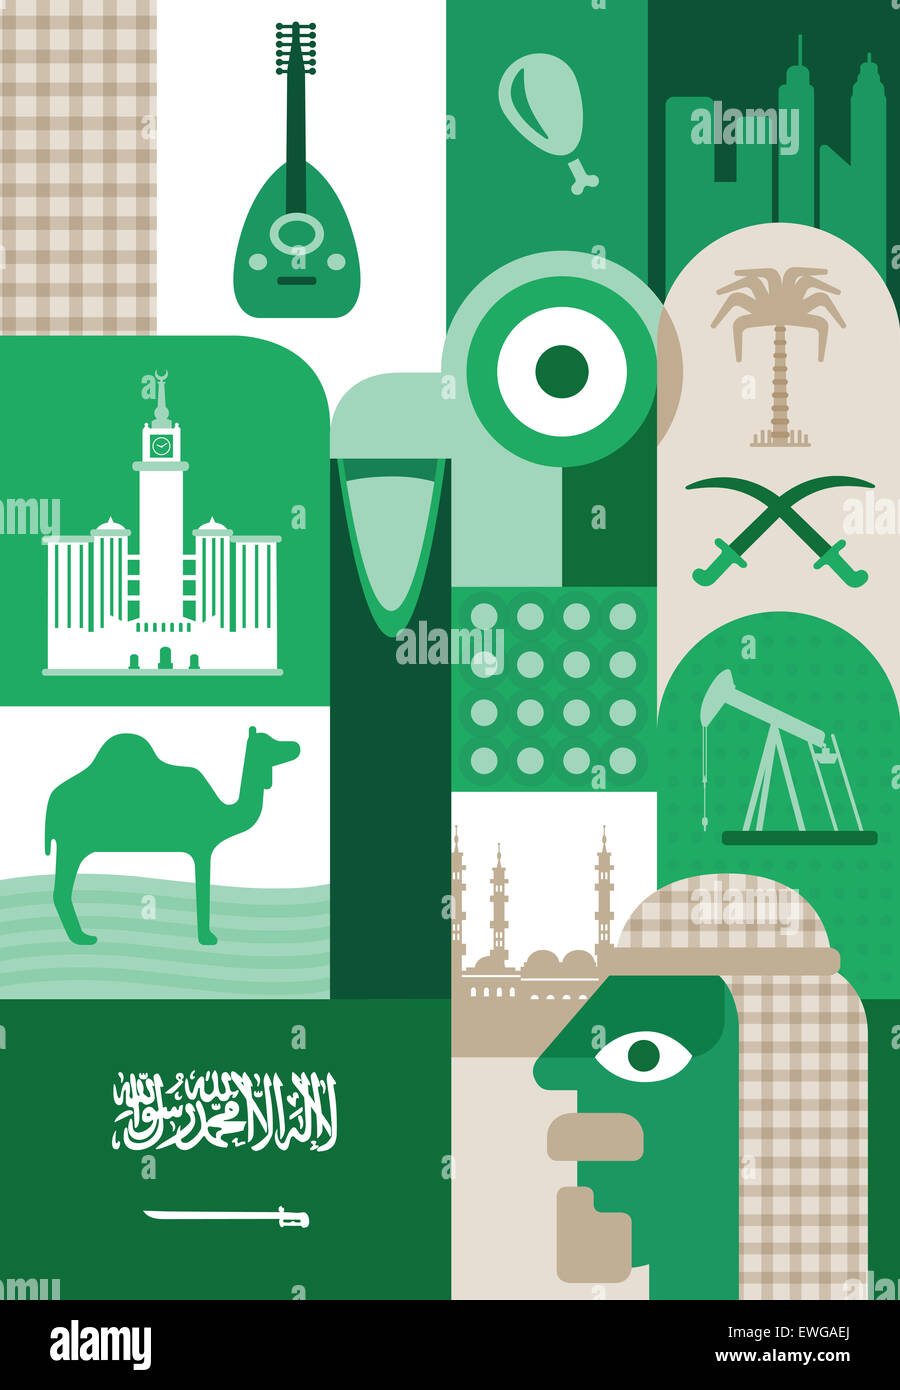 Illustrative representation of Saudi Arabia, UAE Stock Photo